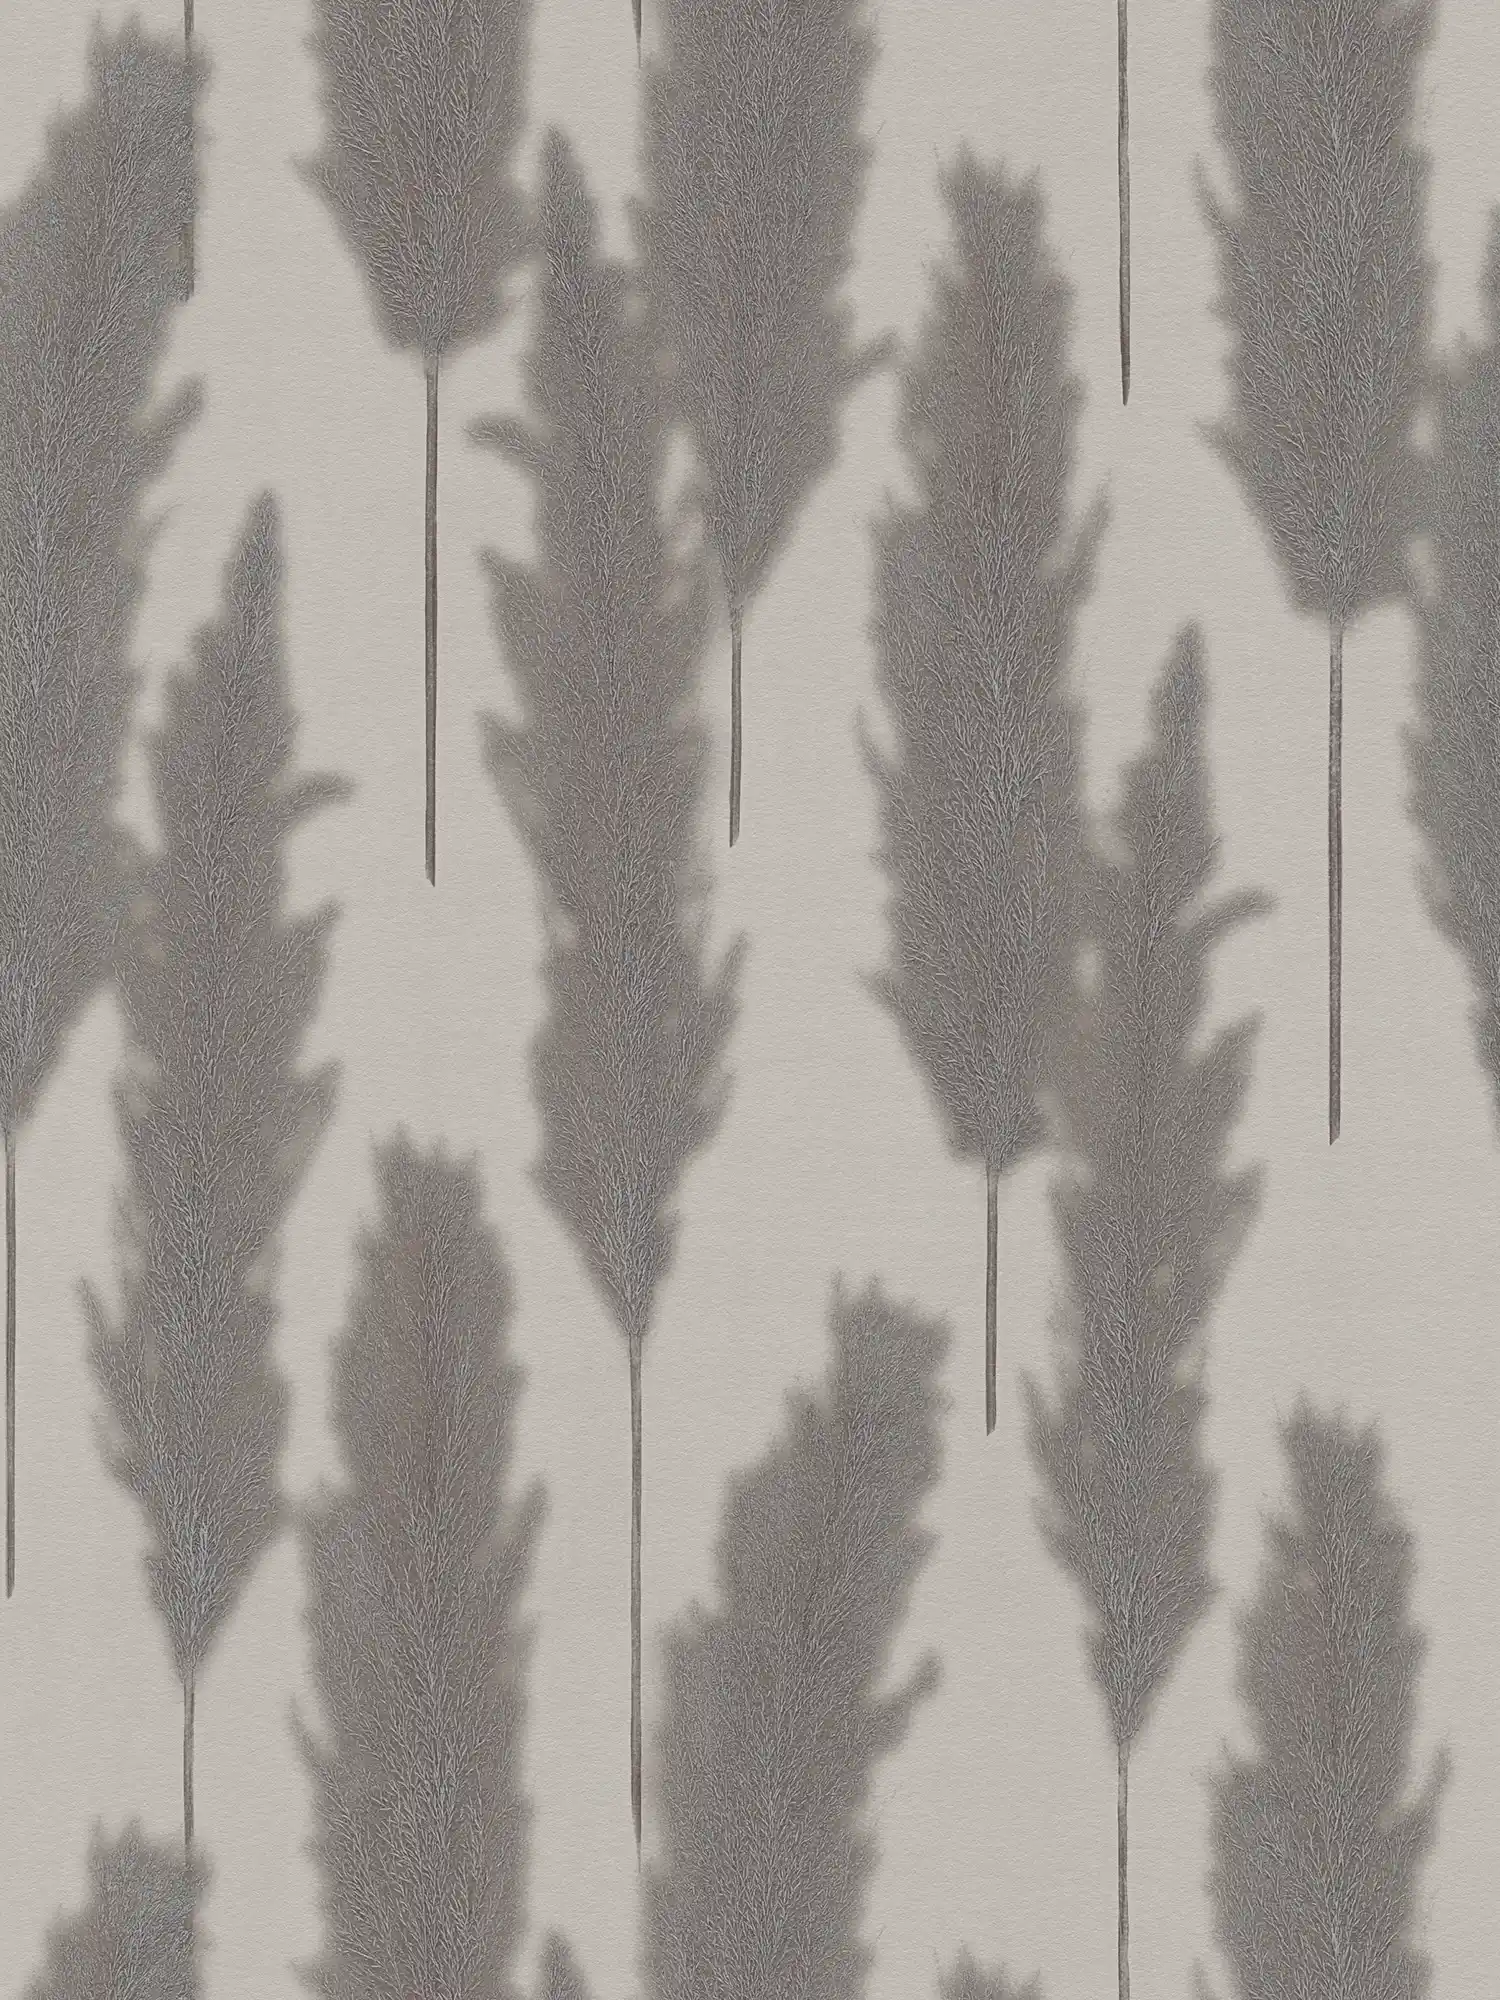 Nature design wallpaper pampas grass pattern - grey, white
